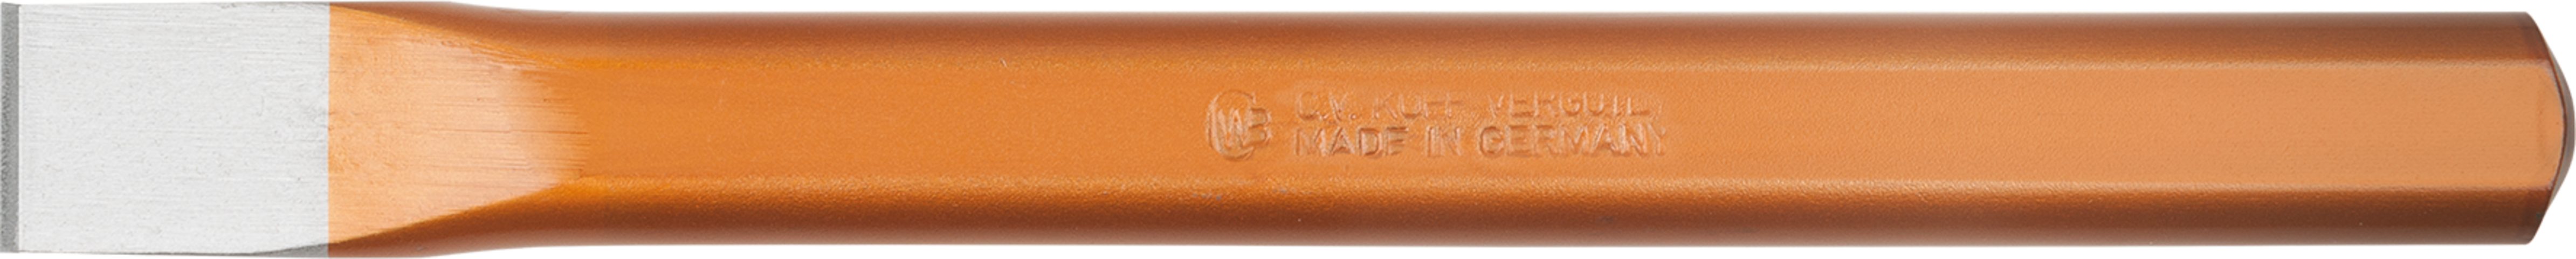 SW-STAHL Flachmeißel 94504L Flachmeißel 250 Chrom-Vanadium-Stahl, aus (1-tlg) lackiert mm